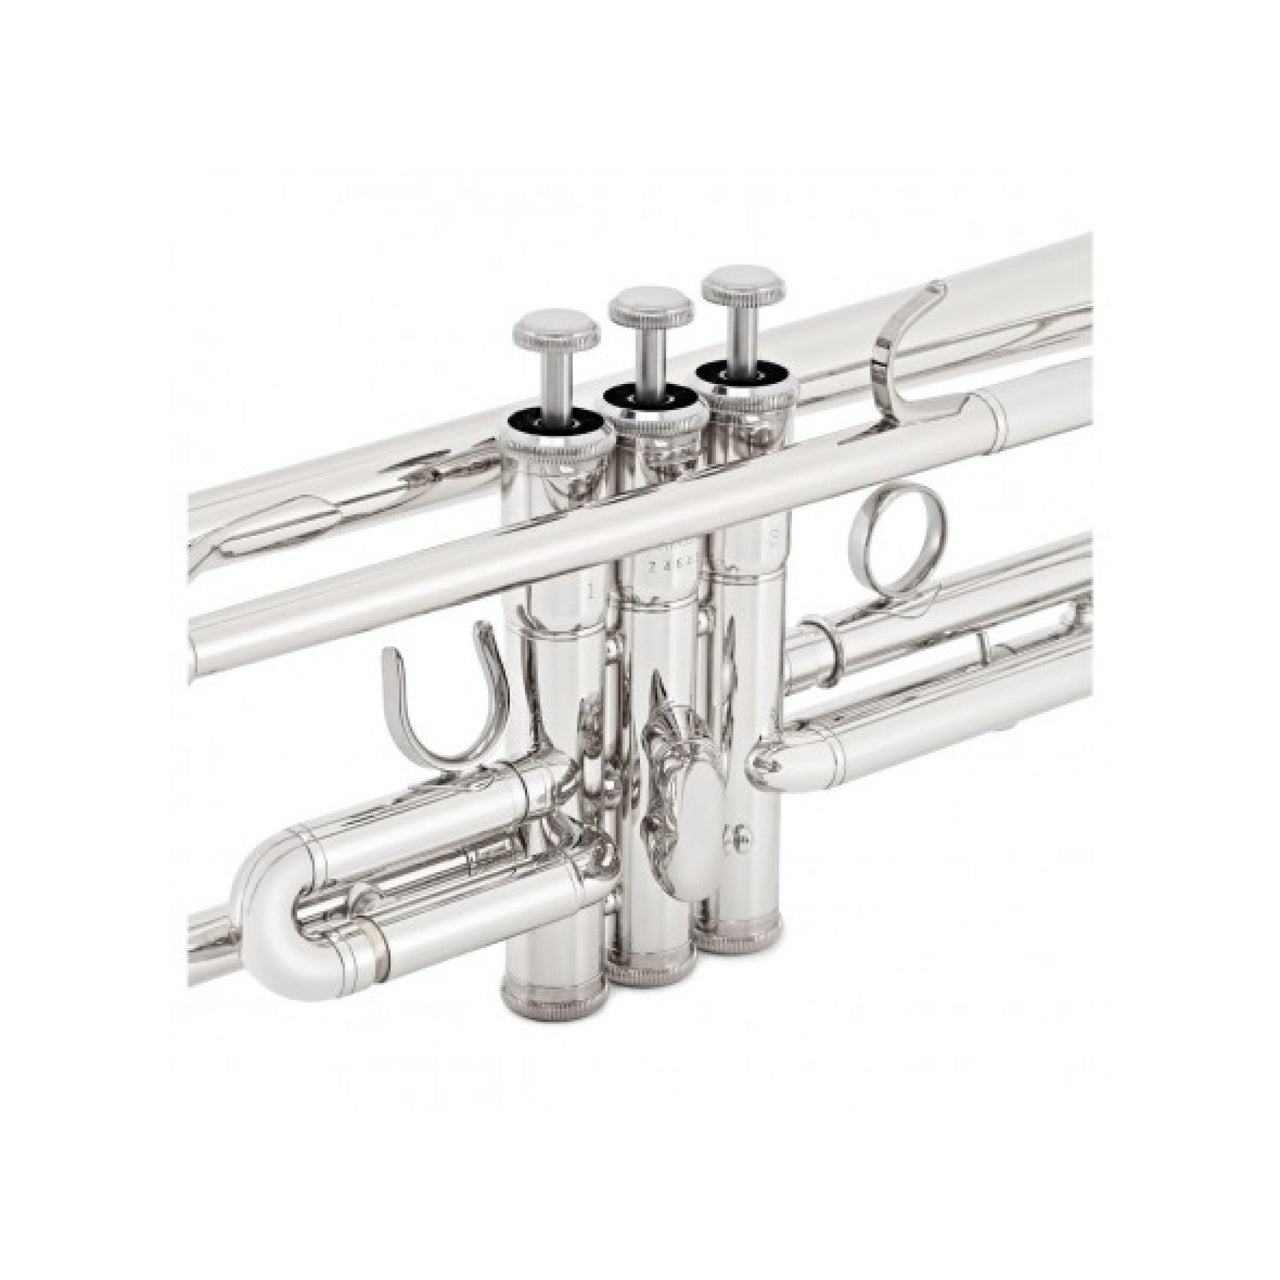 Trompeta Yamaha Intermedia Plateada, Ytr4335gsii